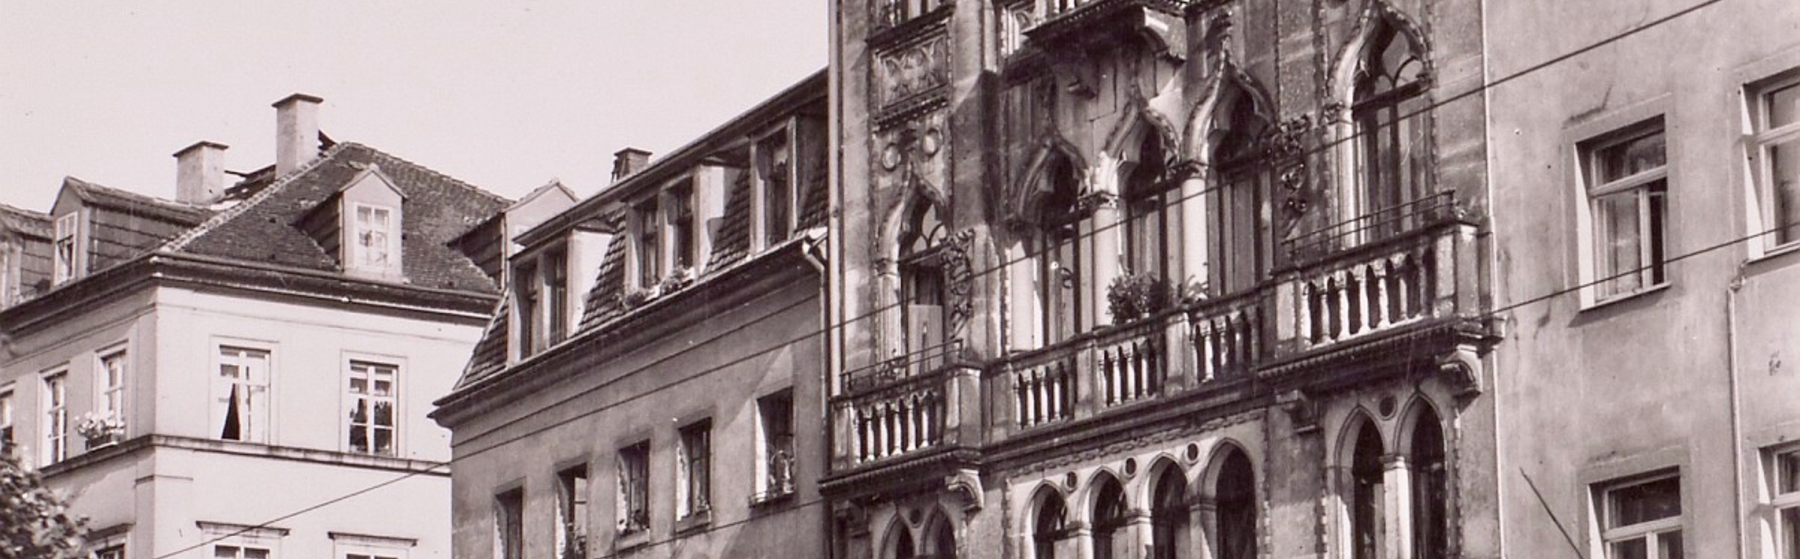 Venezianisches Haus